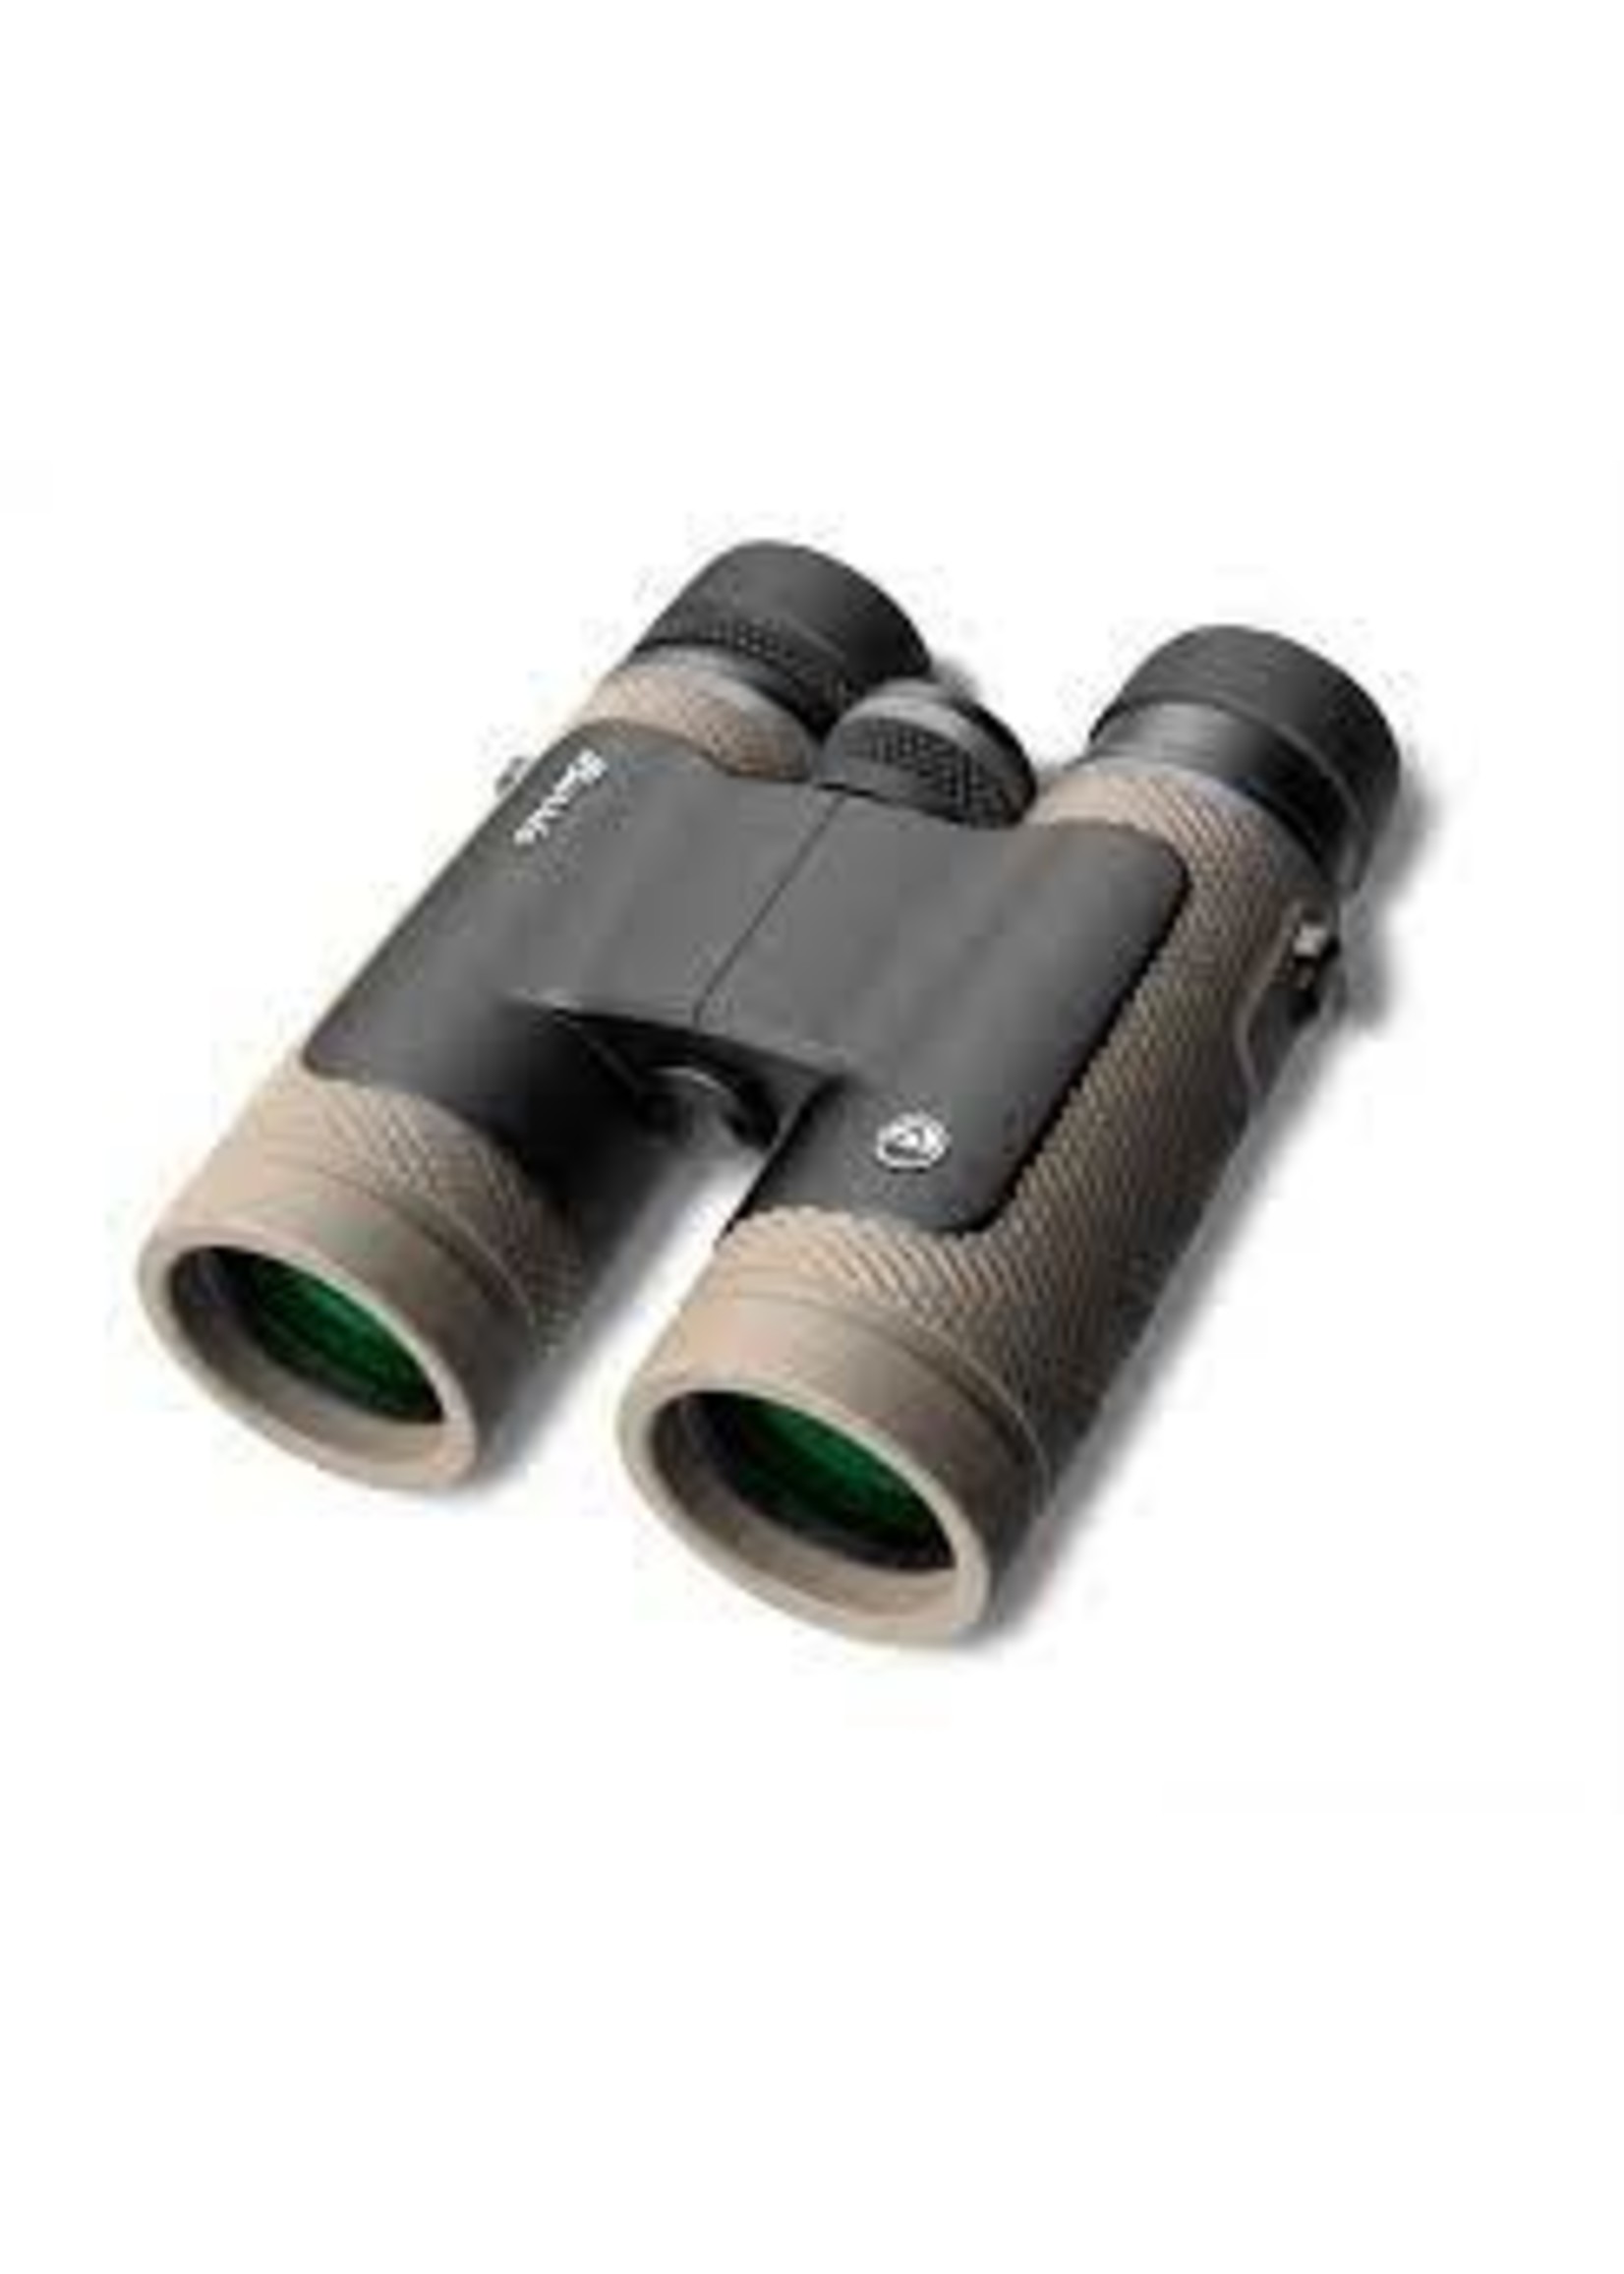 Burris Droptine 10x42 binoculars